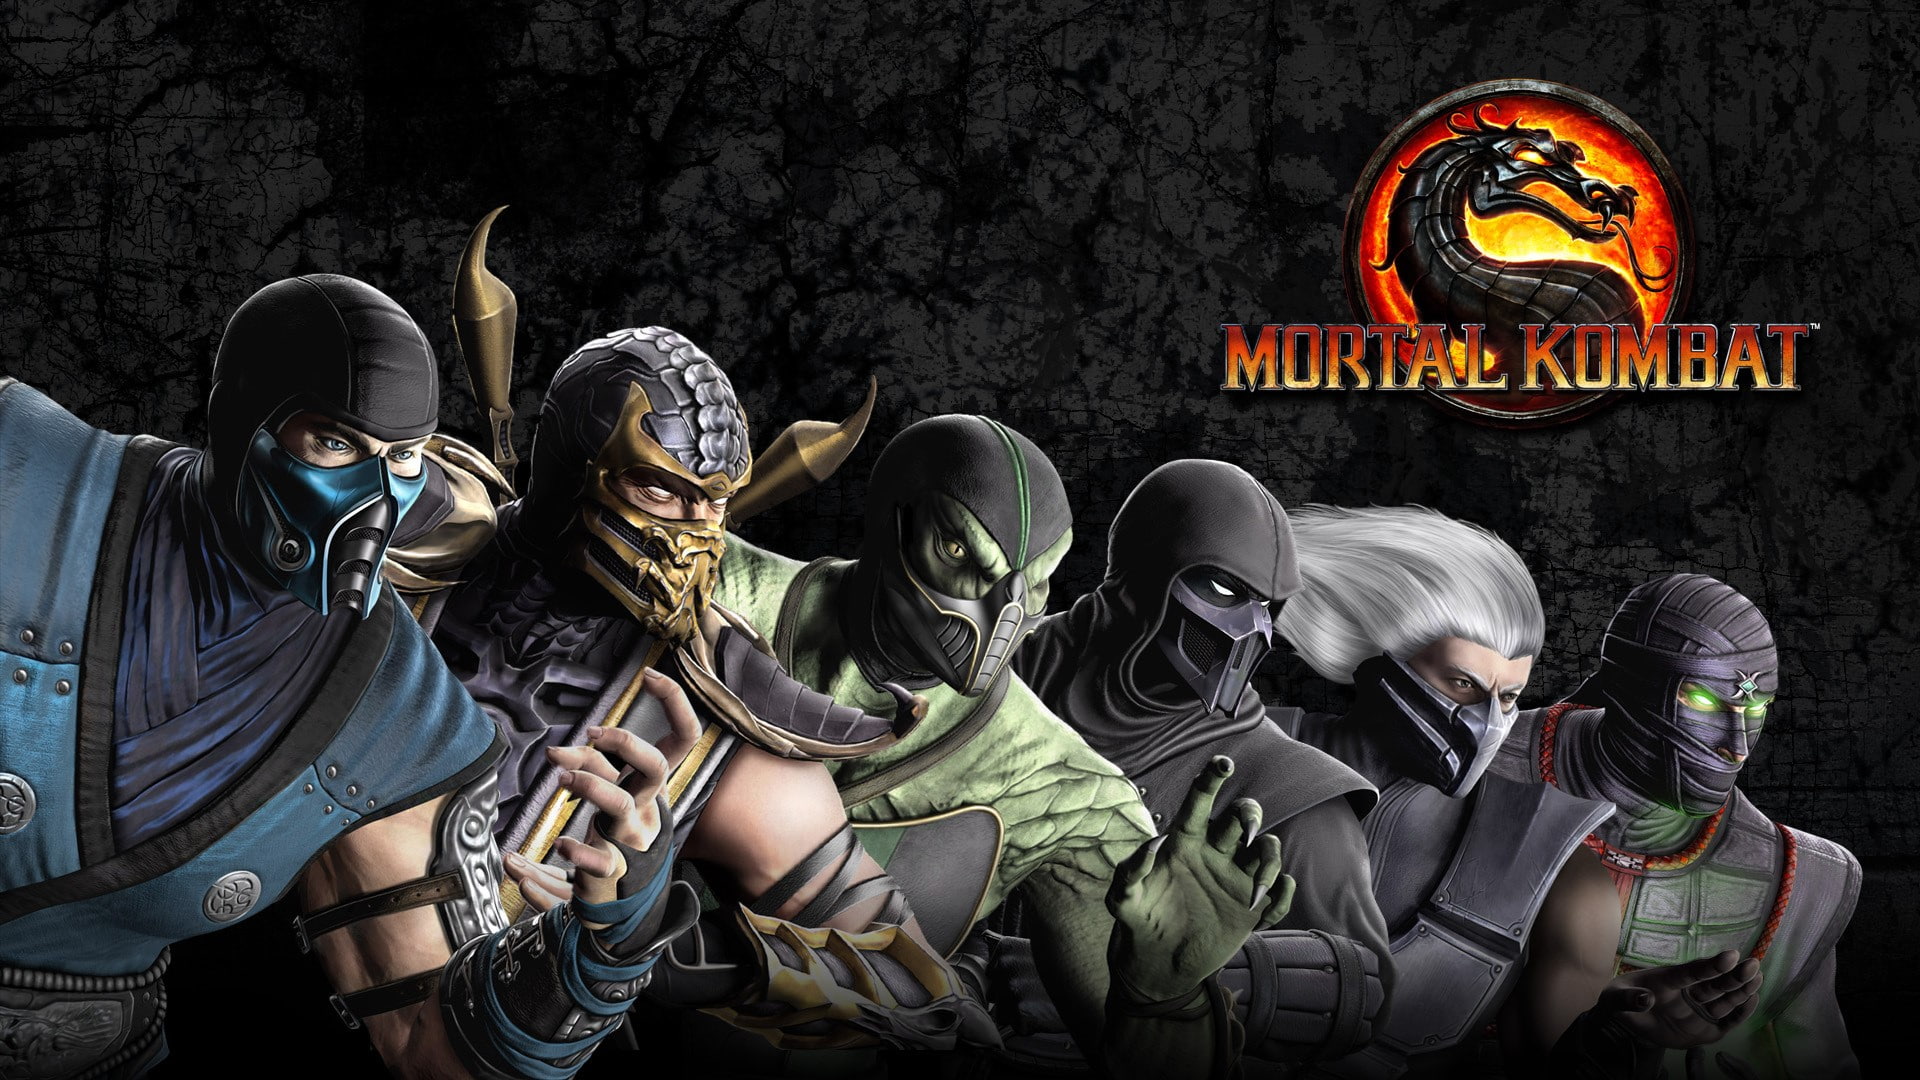 Mortal kombat, Ninja, Sub-zero, Scorpion, Dragon, group of people